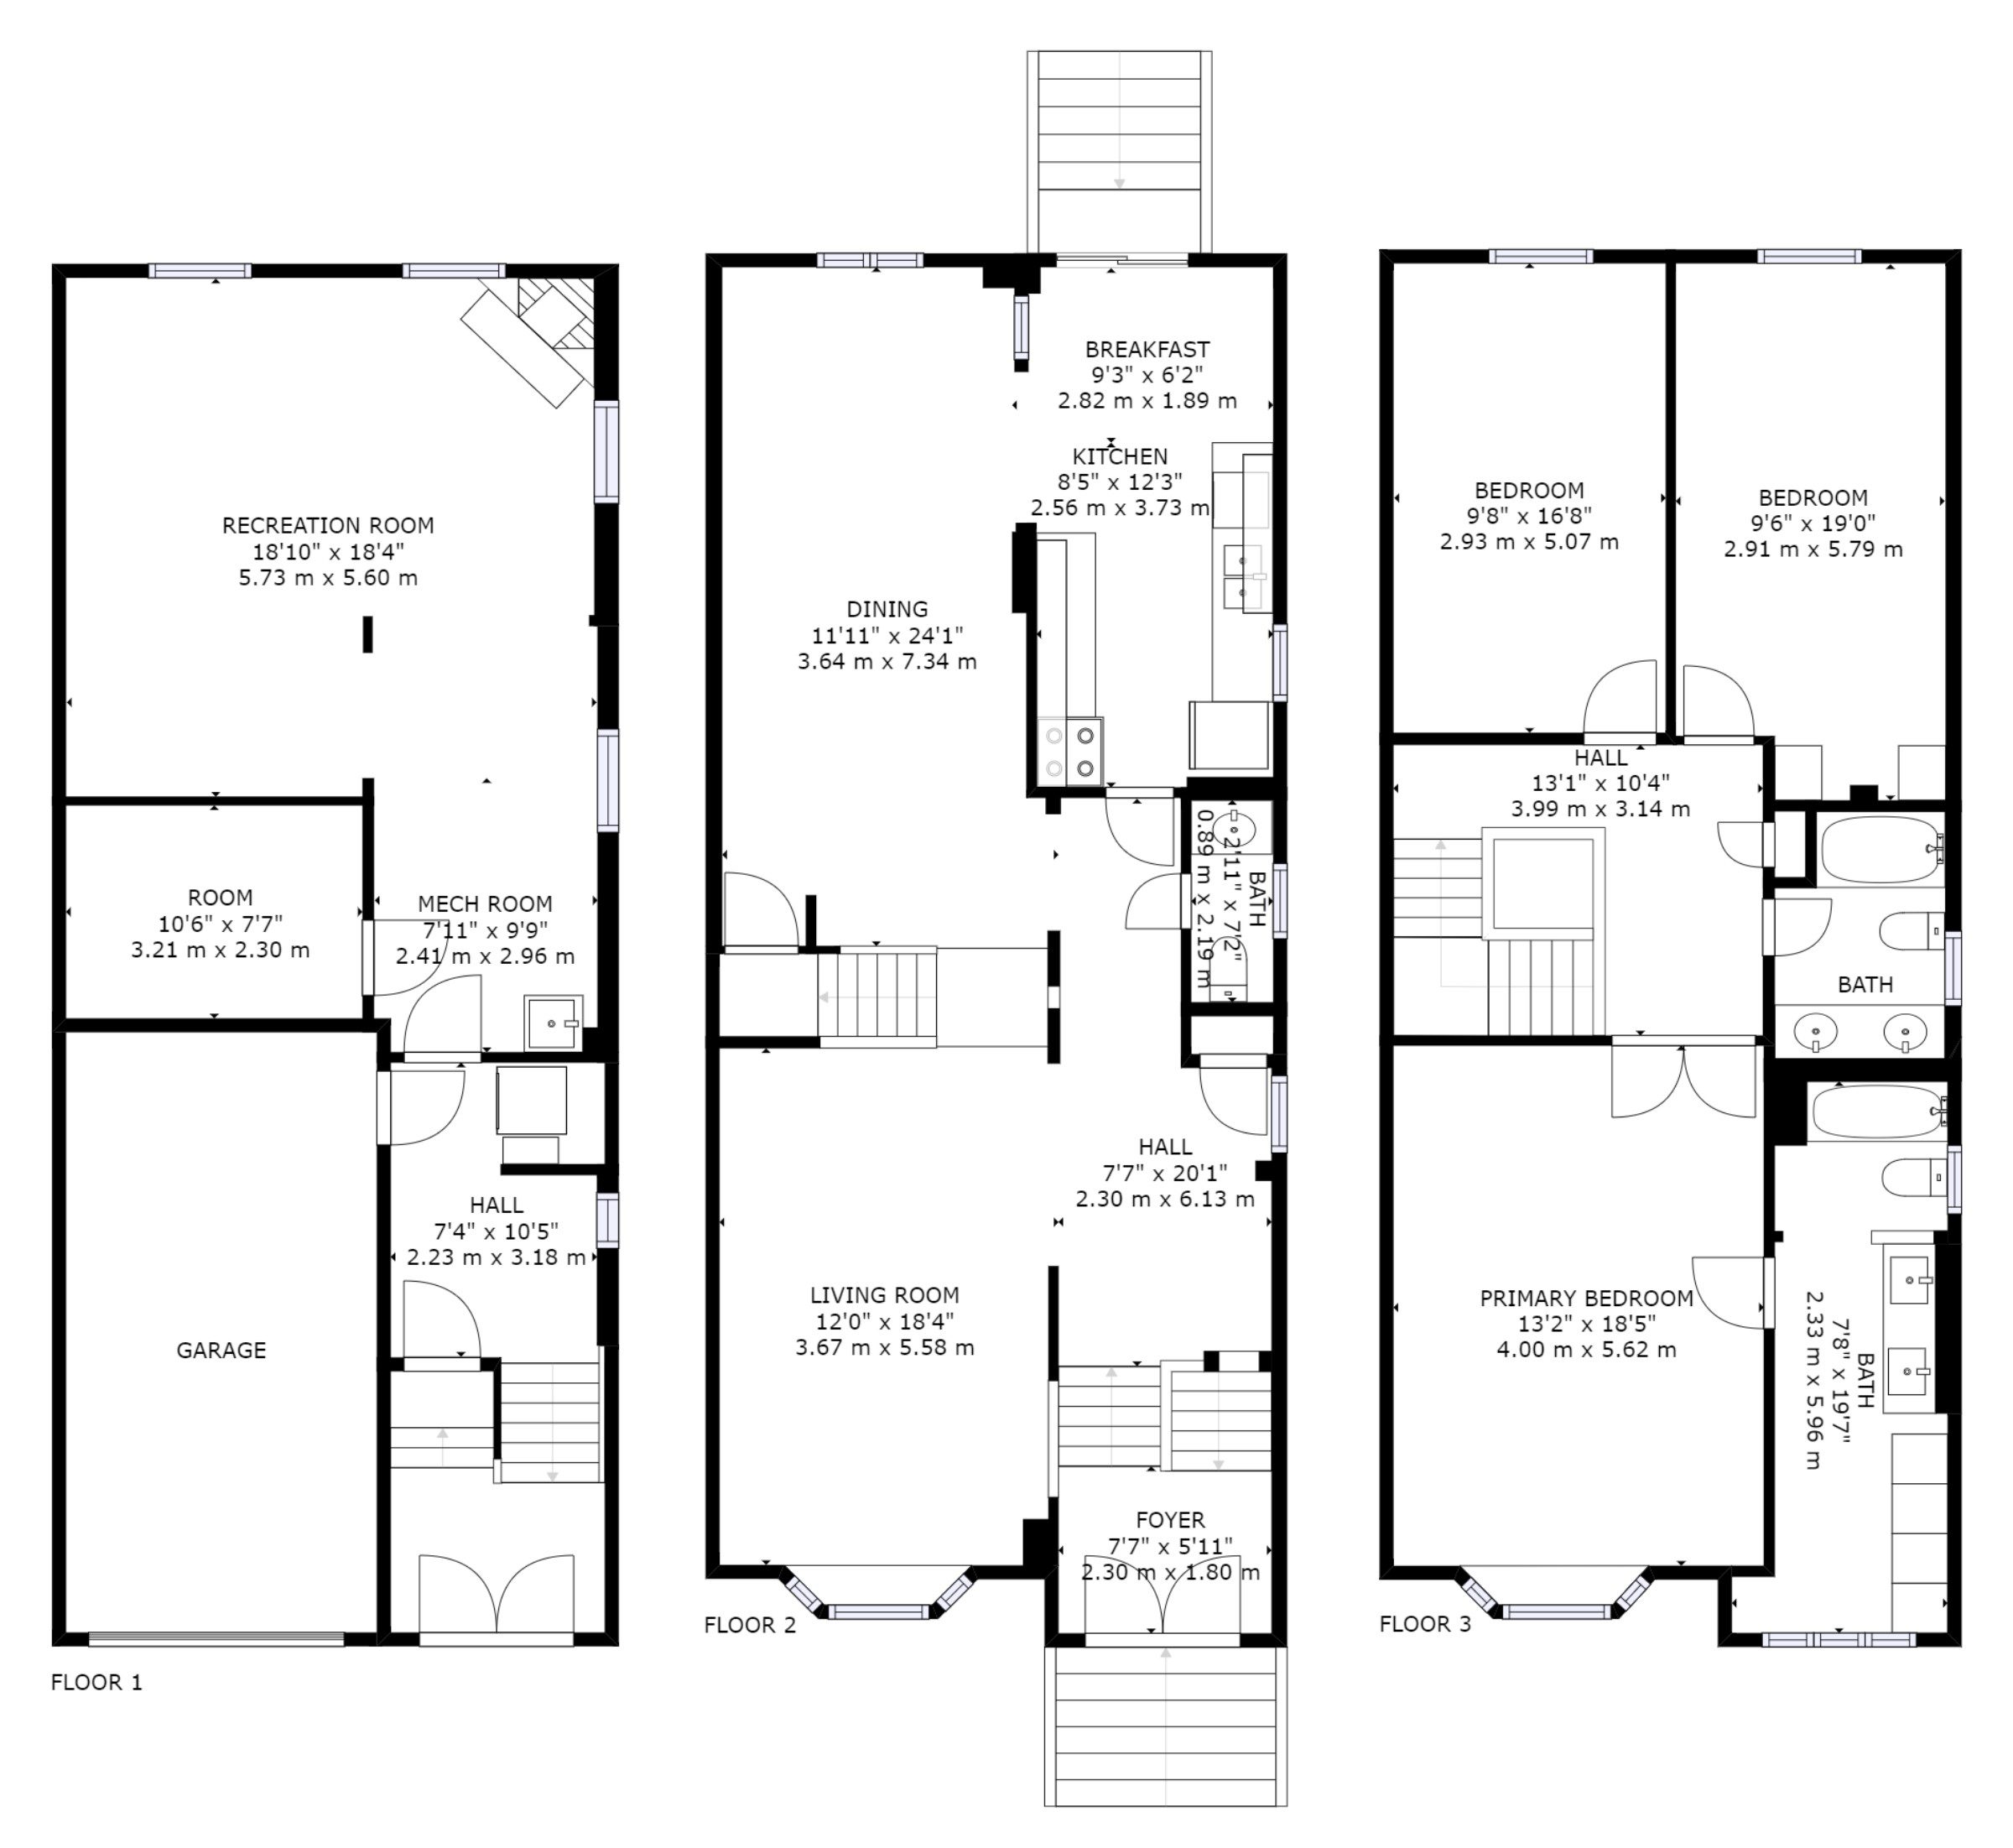 155 Dollery Court - Floor Plans